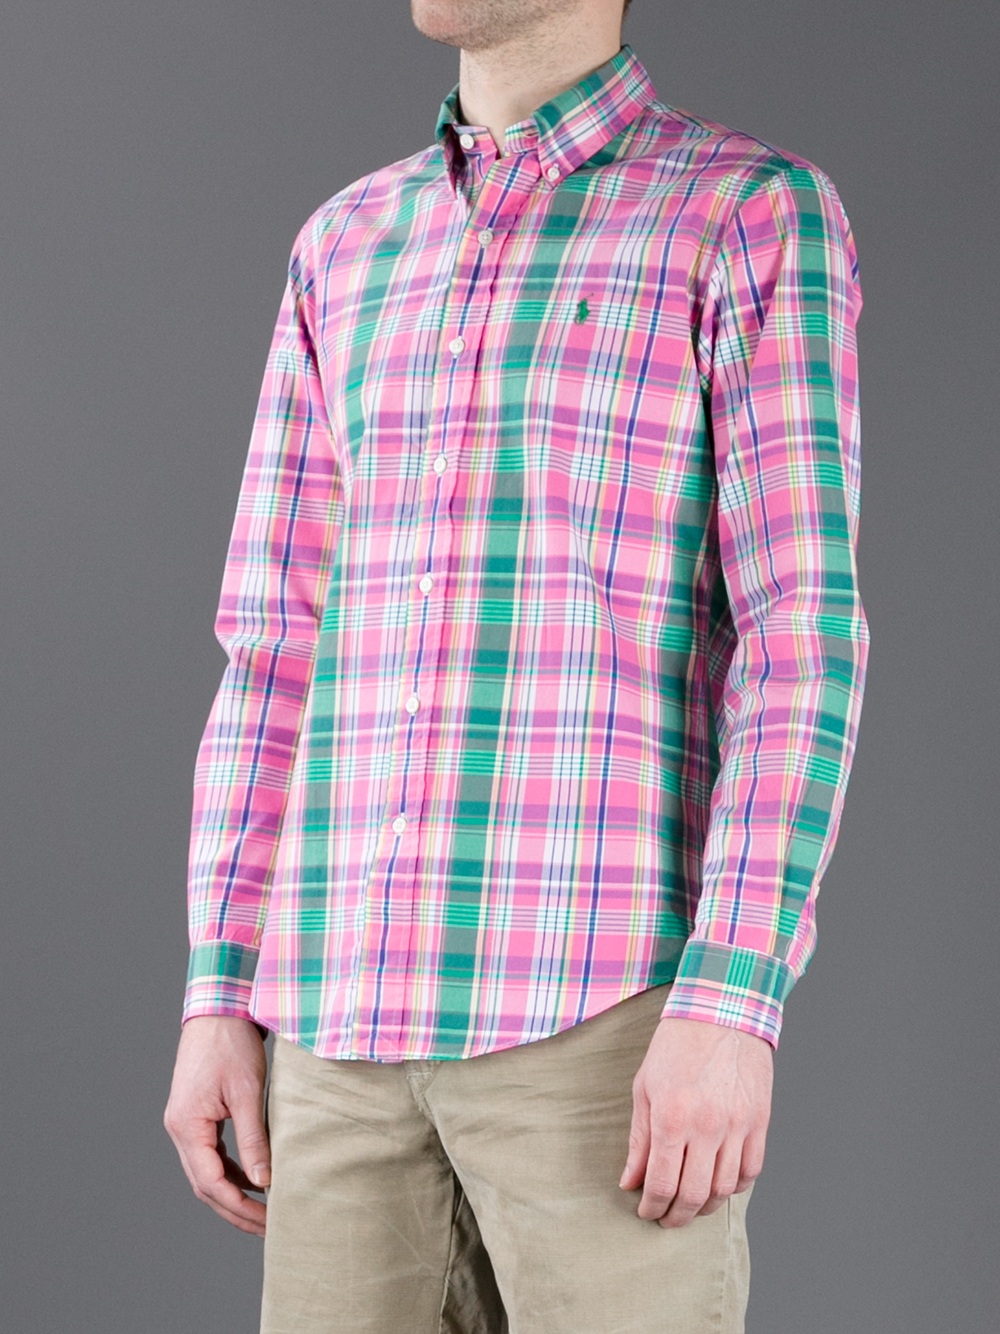 Lyst - Polo Ralph Lauren Plaid Shirt in Pink for Men